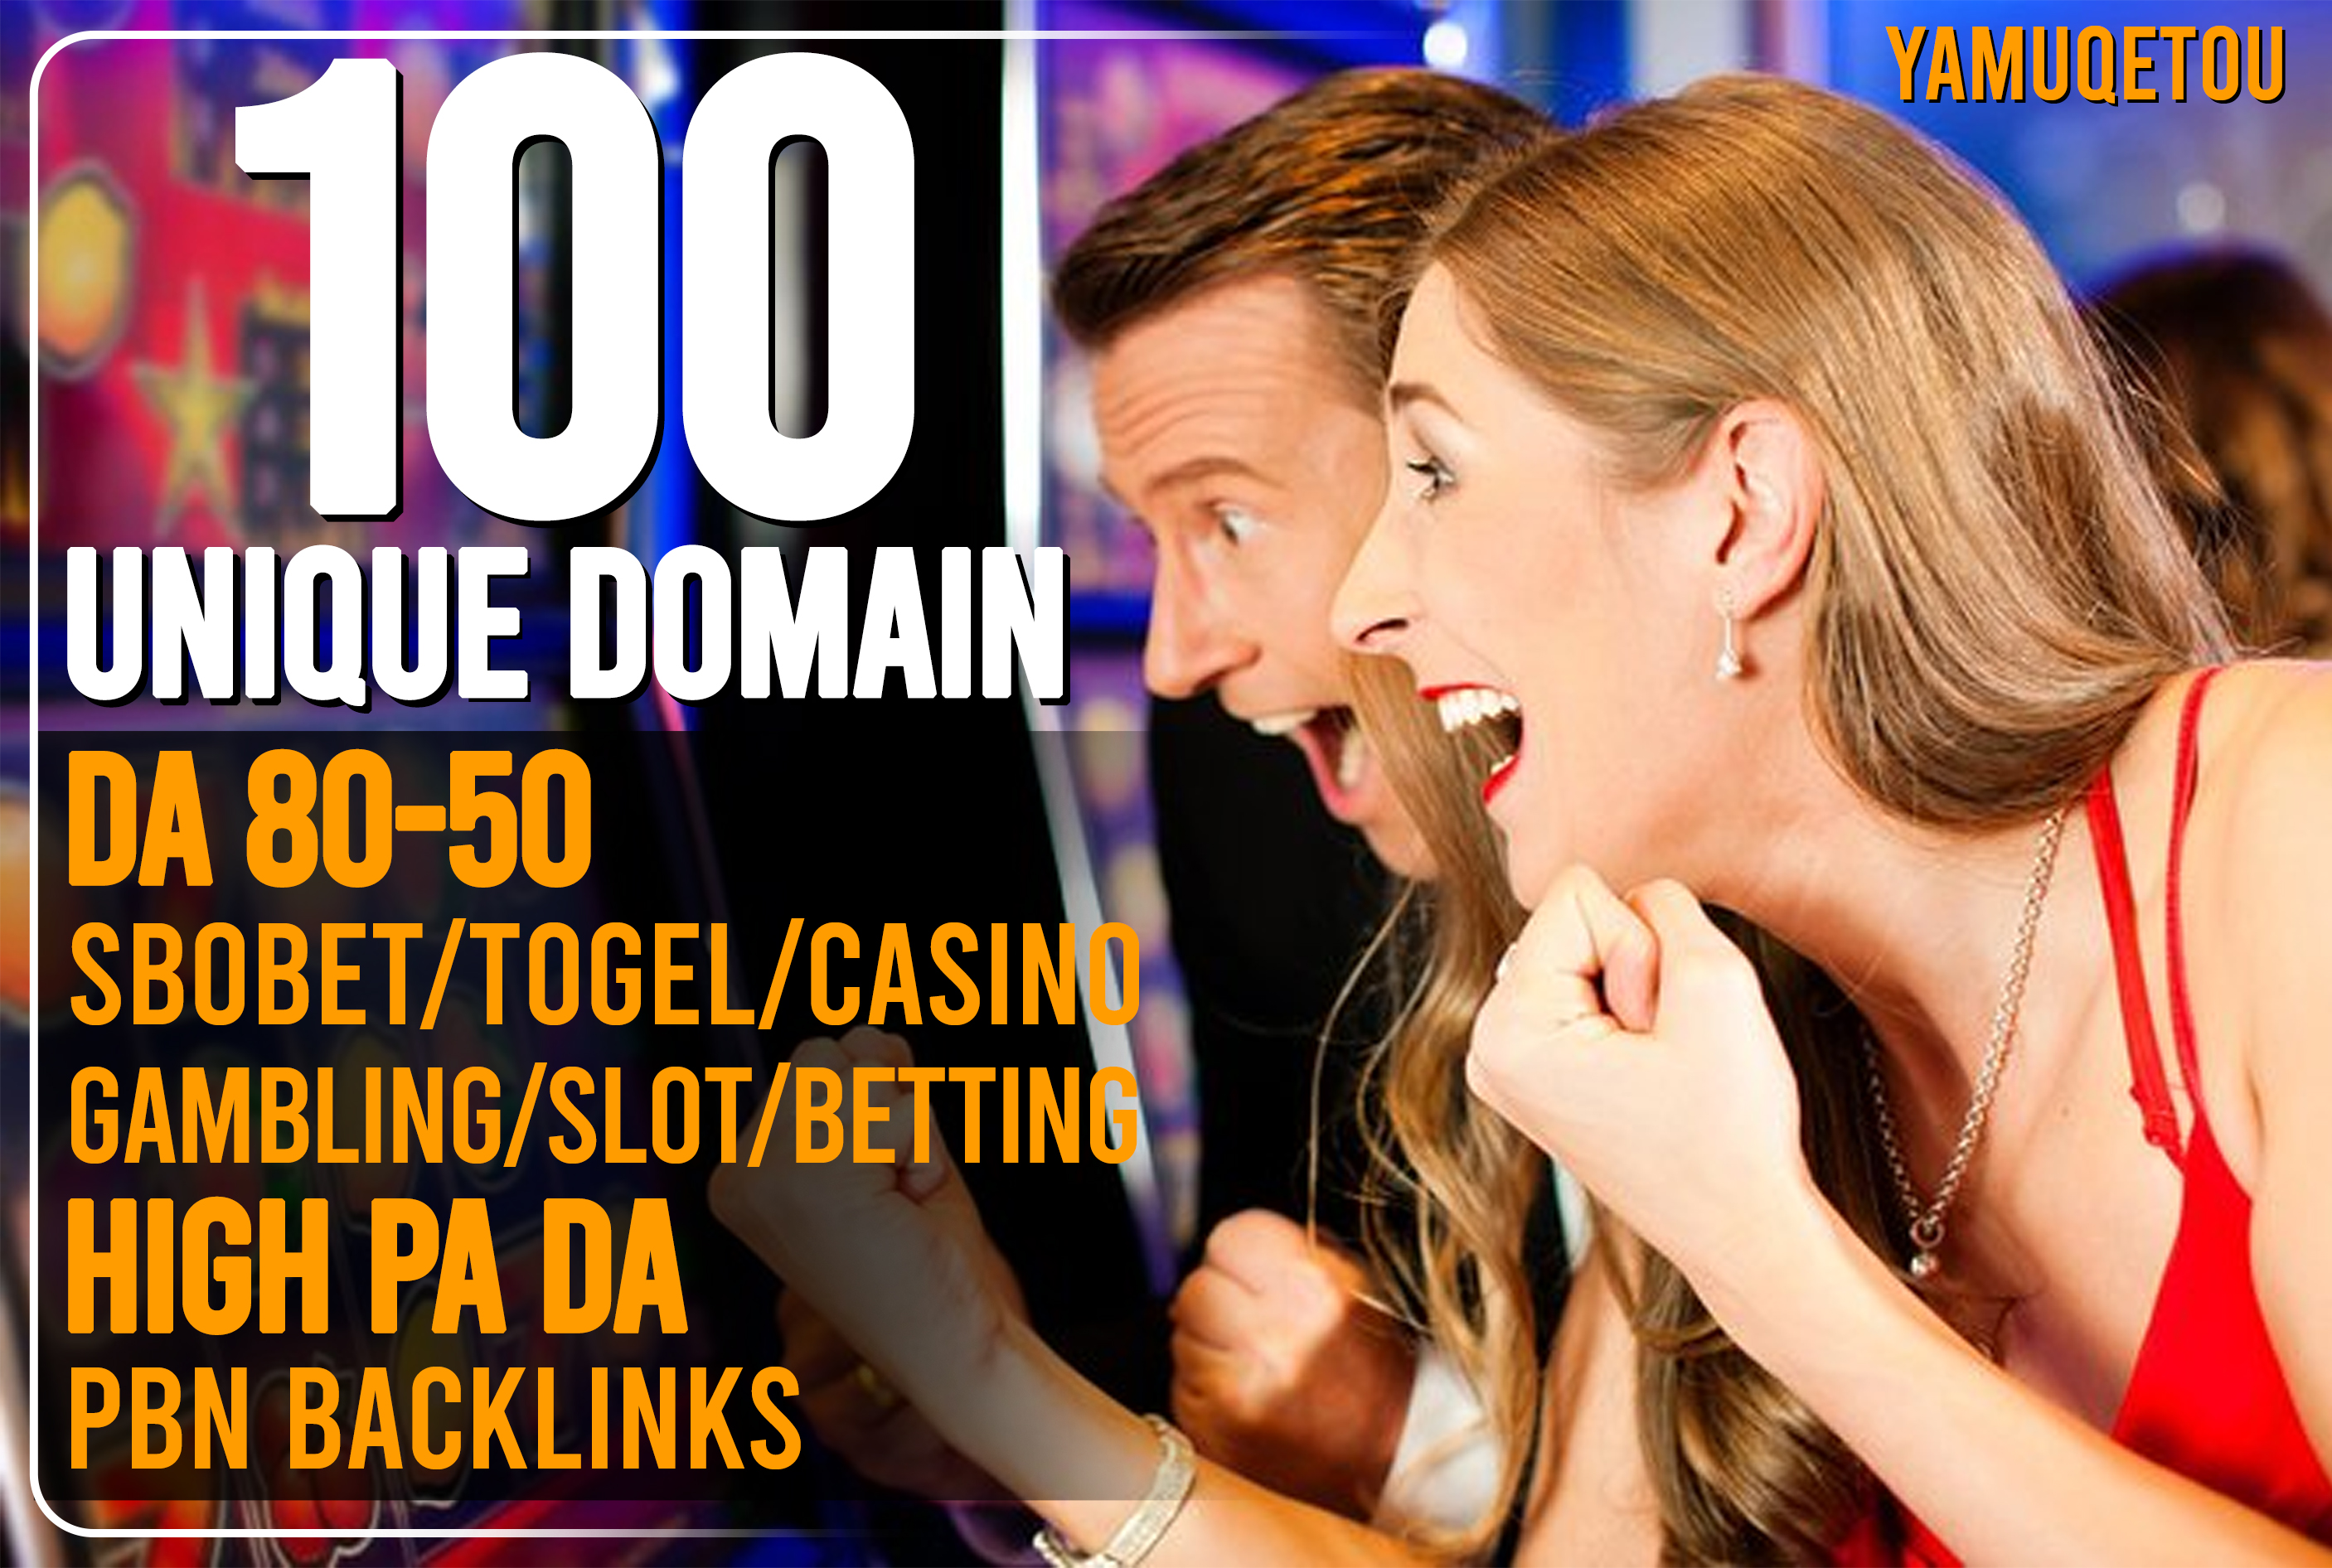 You Will Get 100 Unique Domain Sbobet/Togel/Casino/Gambling/Slot/Betting high PA DA PBN backlinks